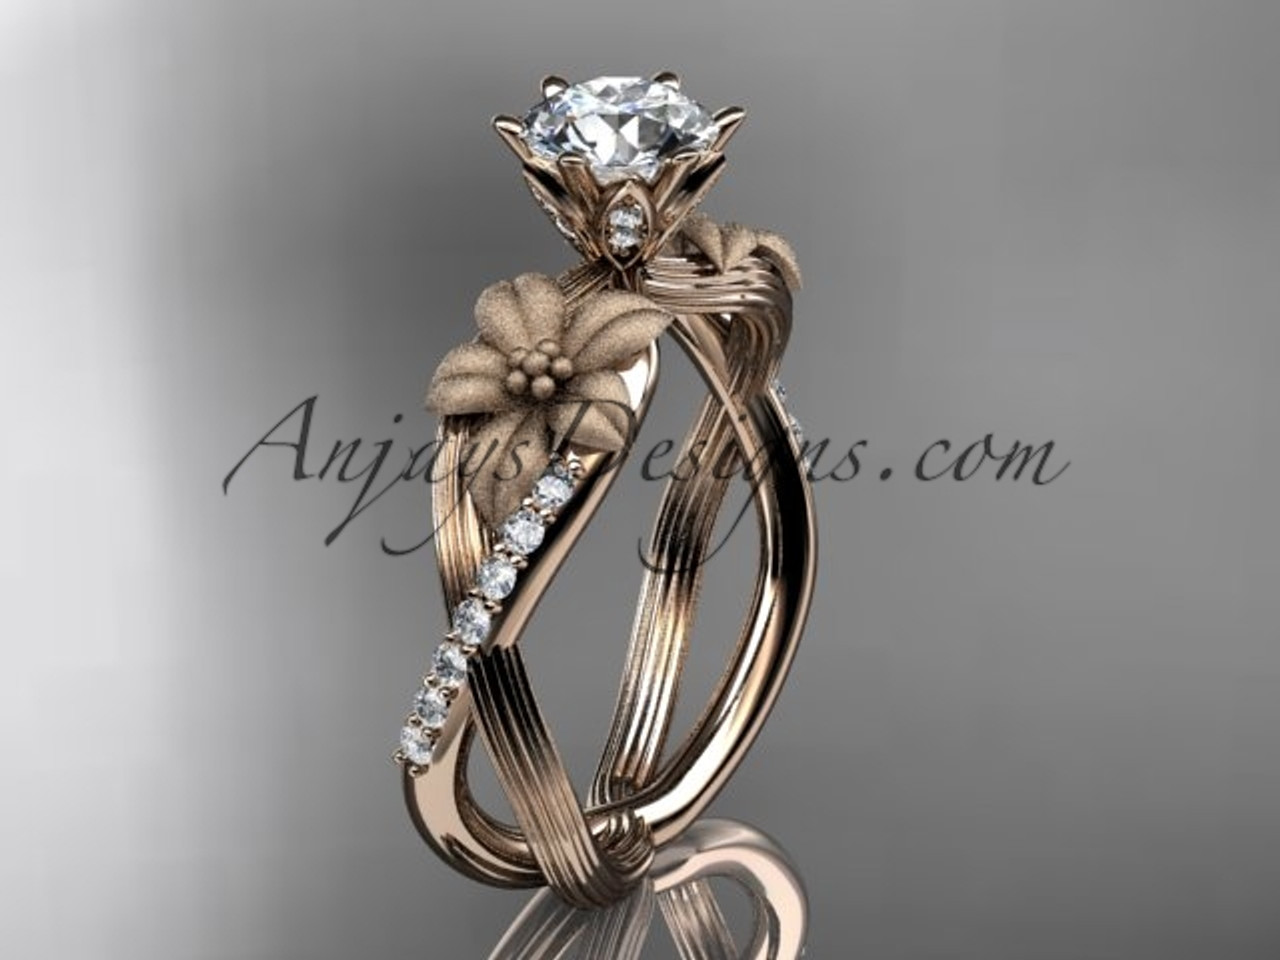 Modern double band wedding ring 14k rose gold ring ADER146S